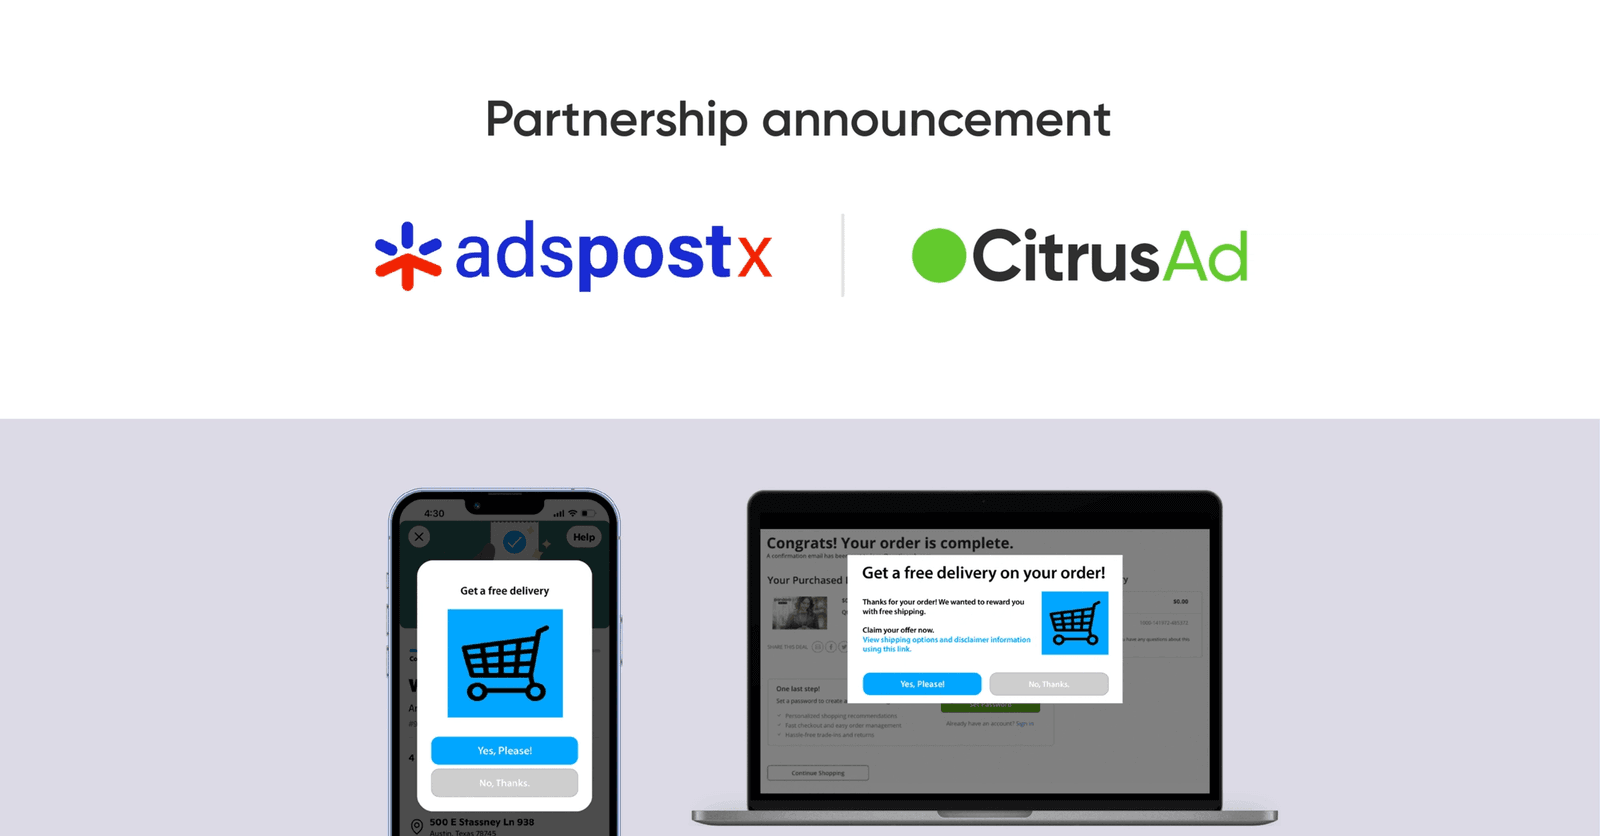 AdsPostX secures CitrusAd partnership